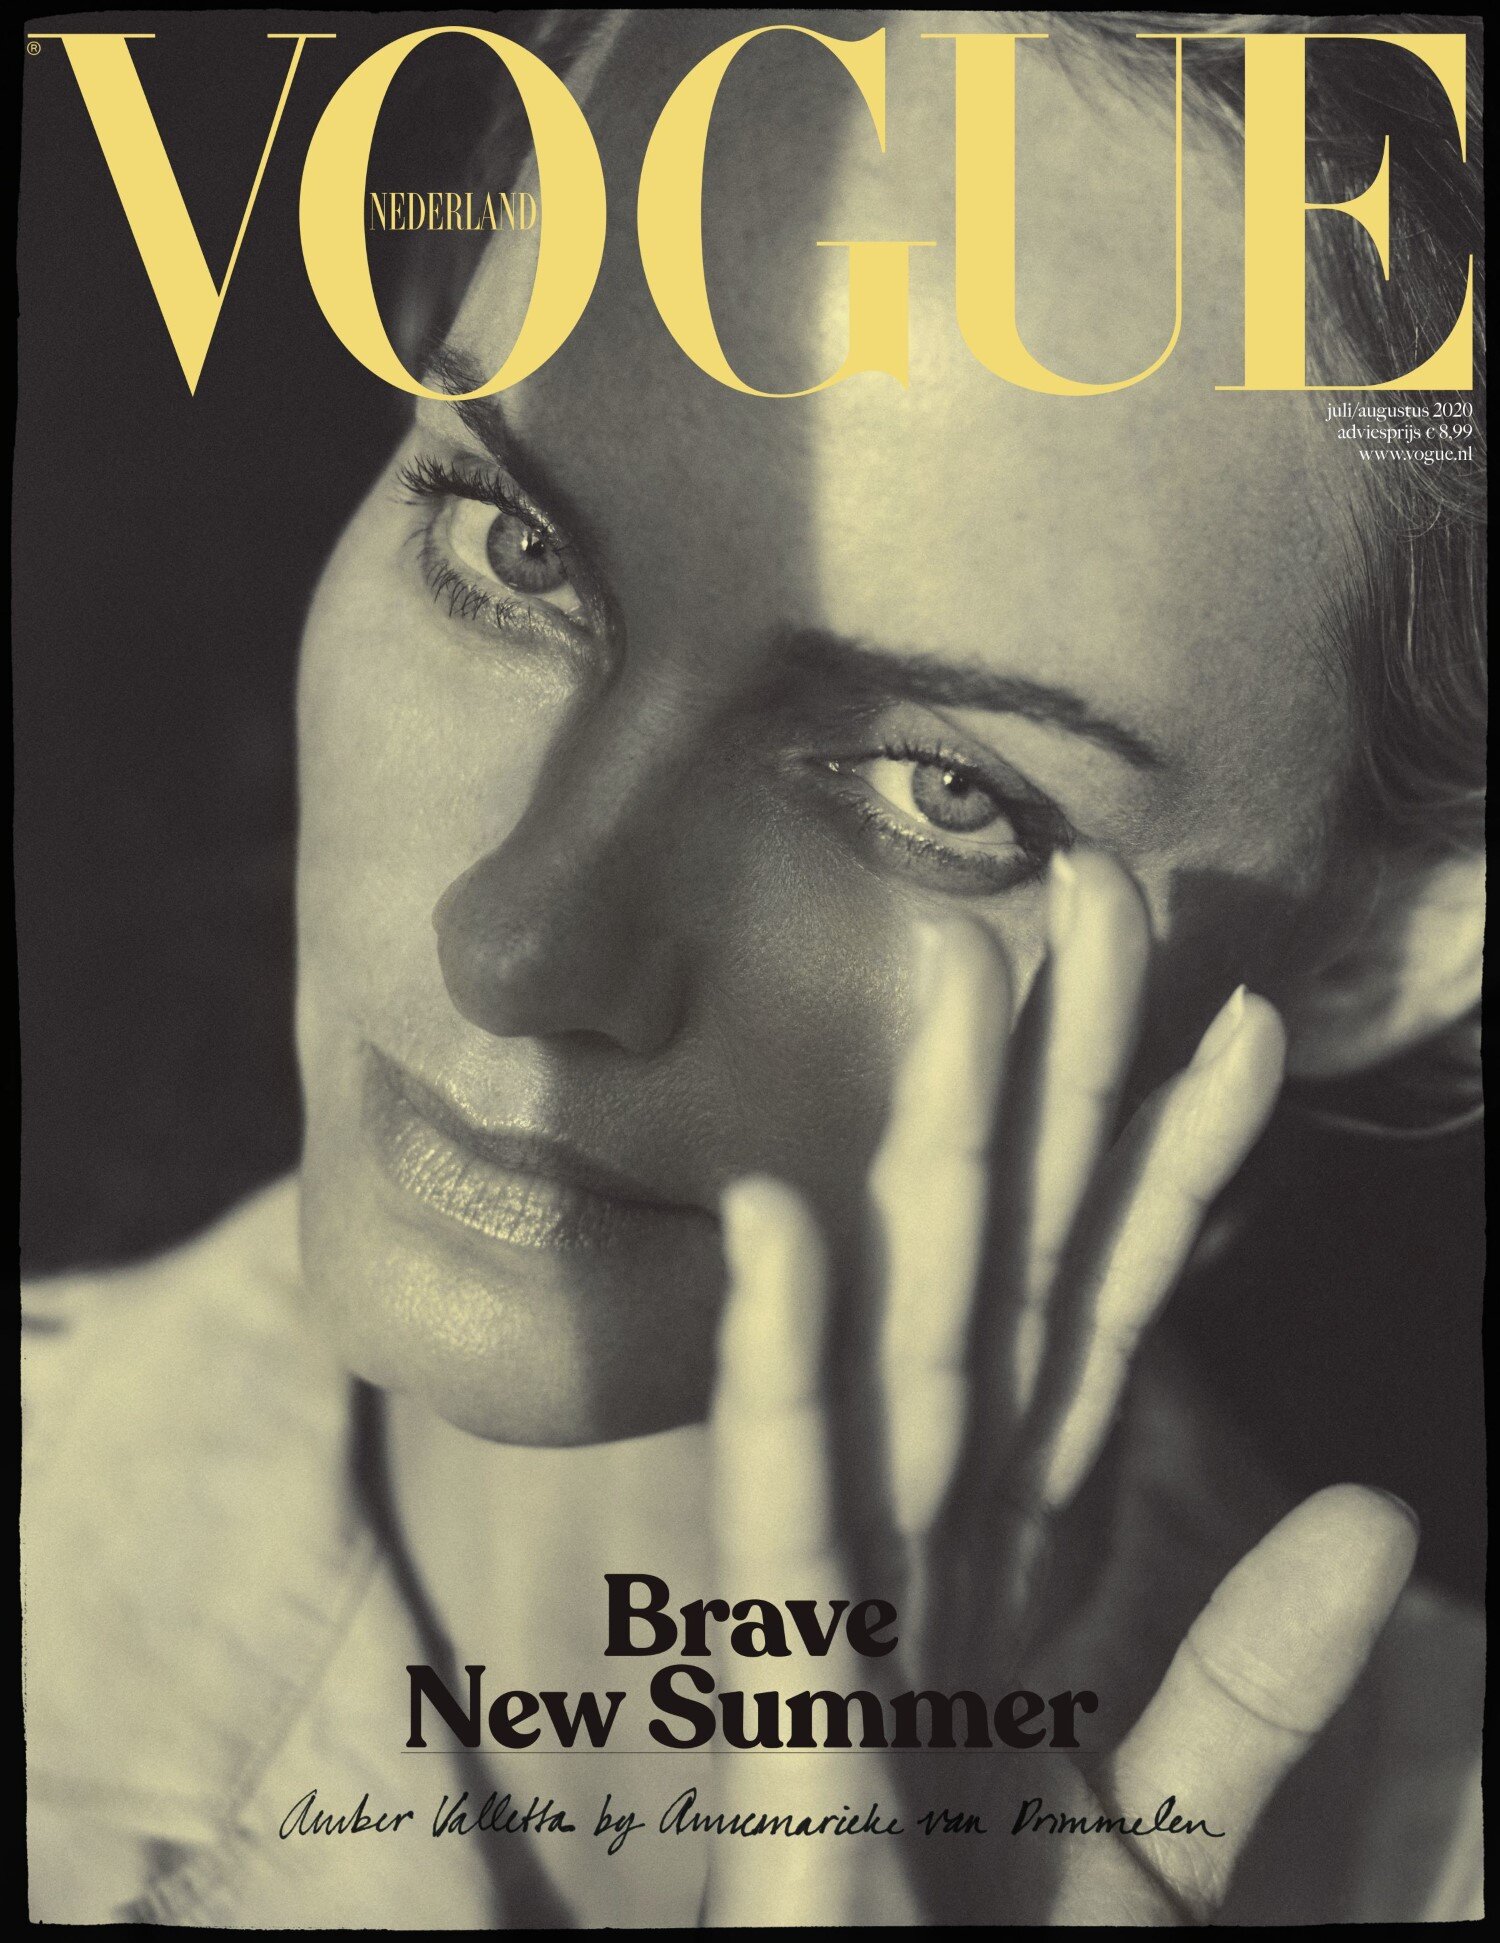 Vogue Netherlands July Aig 2020 Annemarieke Van Drimmelen (2).jpg